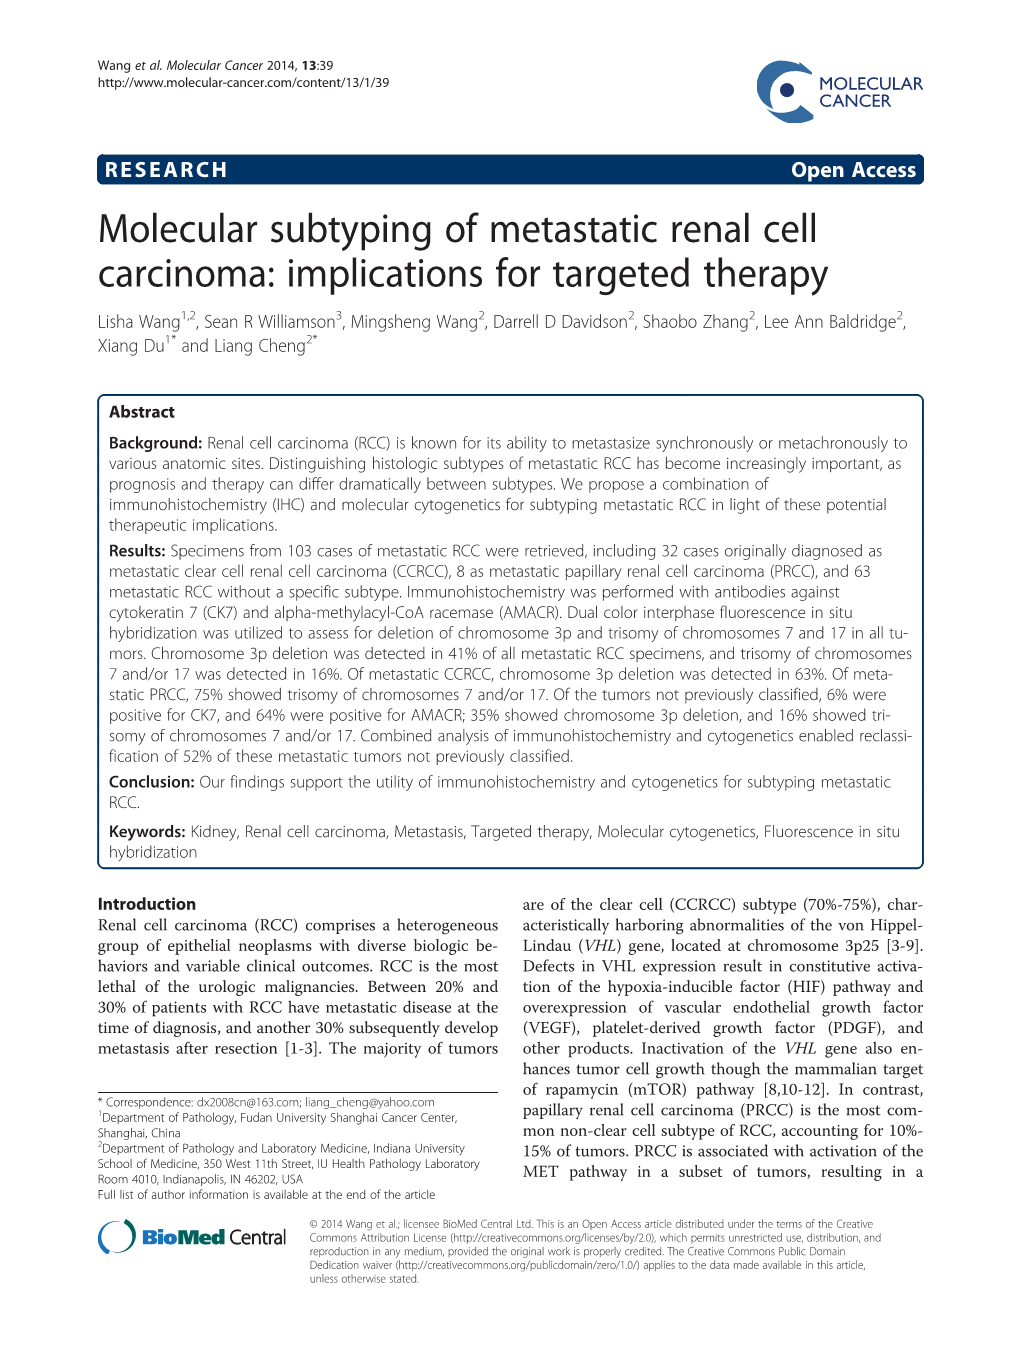 Molecular Subtyping of Metastatic Renal Cell Carcinoma